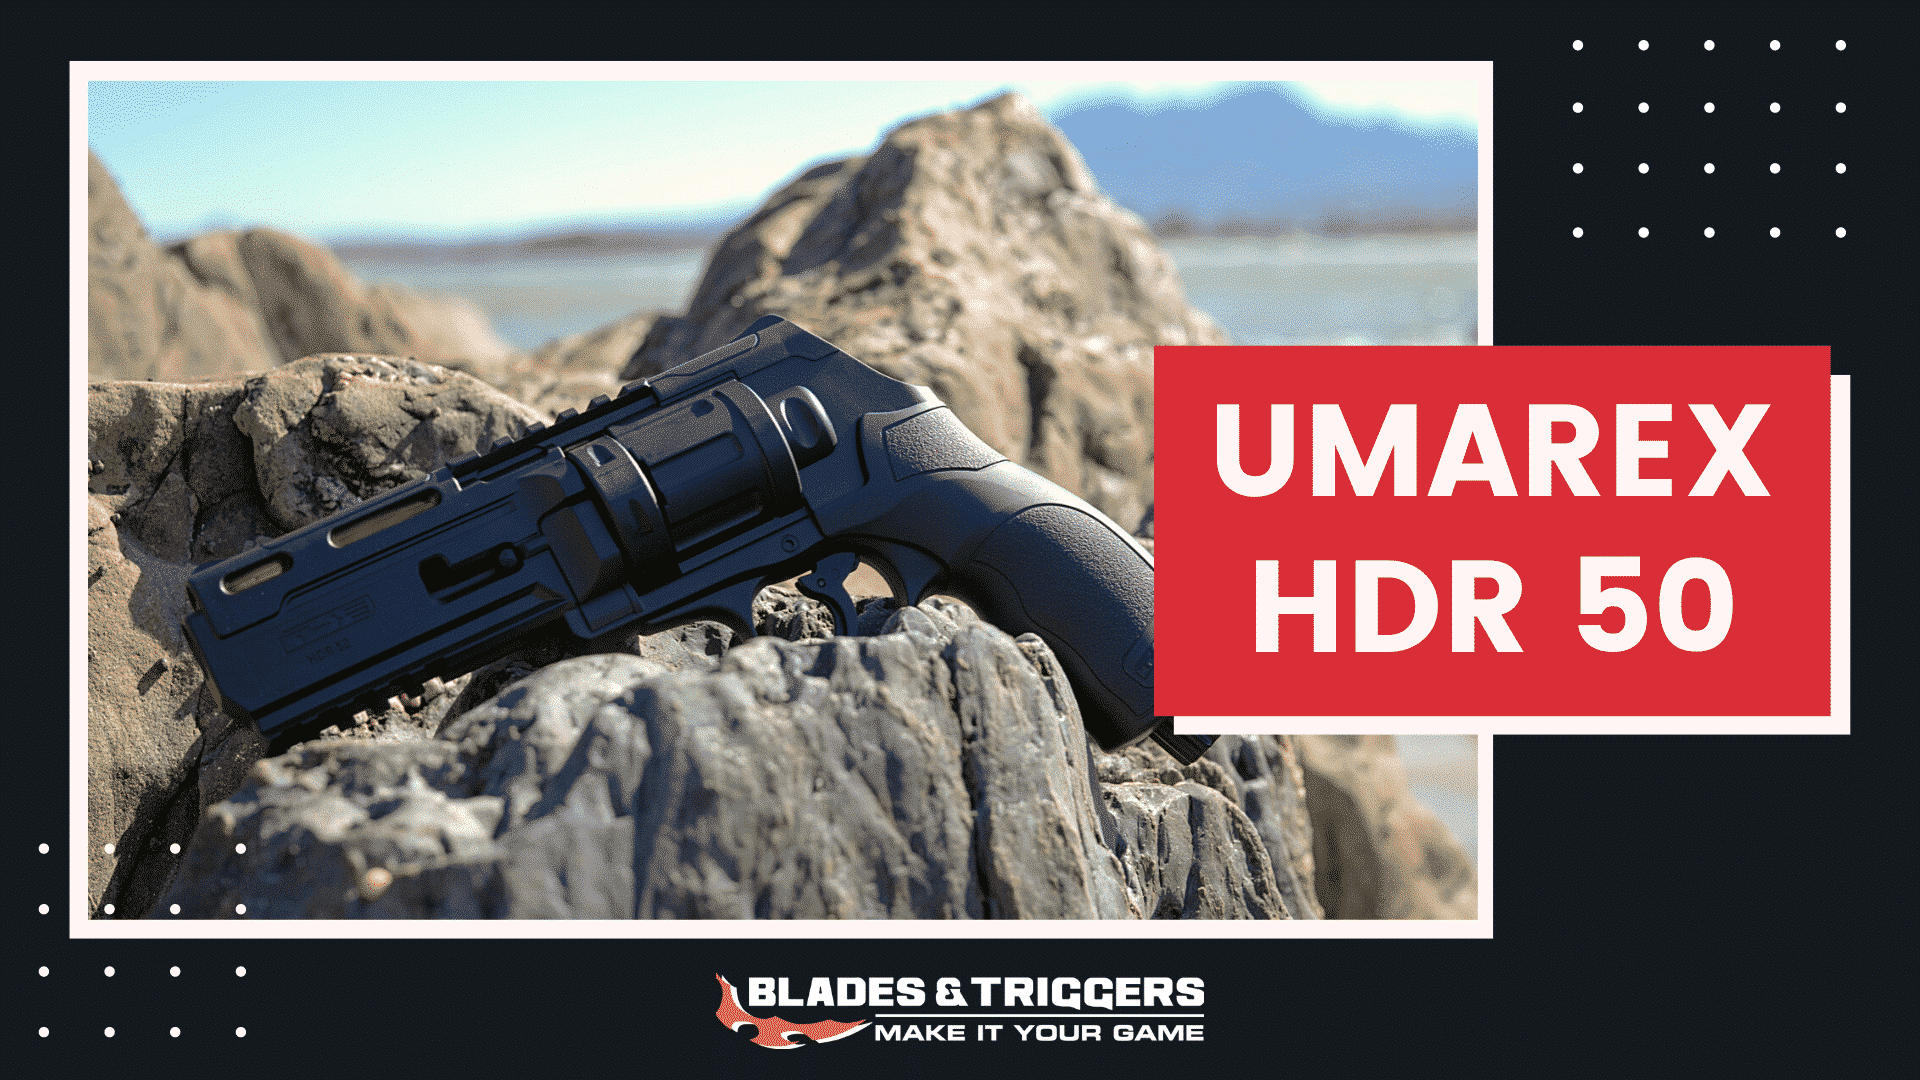 T4E Umarex HDR50 Ammo6 RAM Gussform mold ammu maker home defense 30j DIY cal.50 